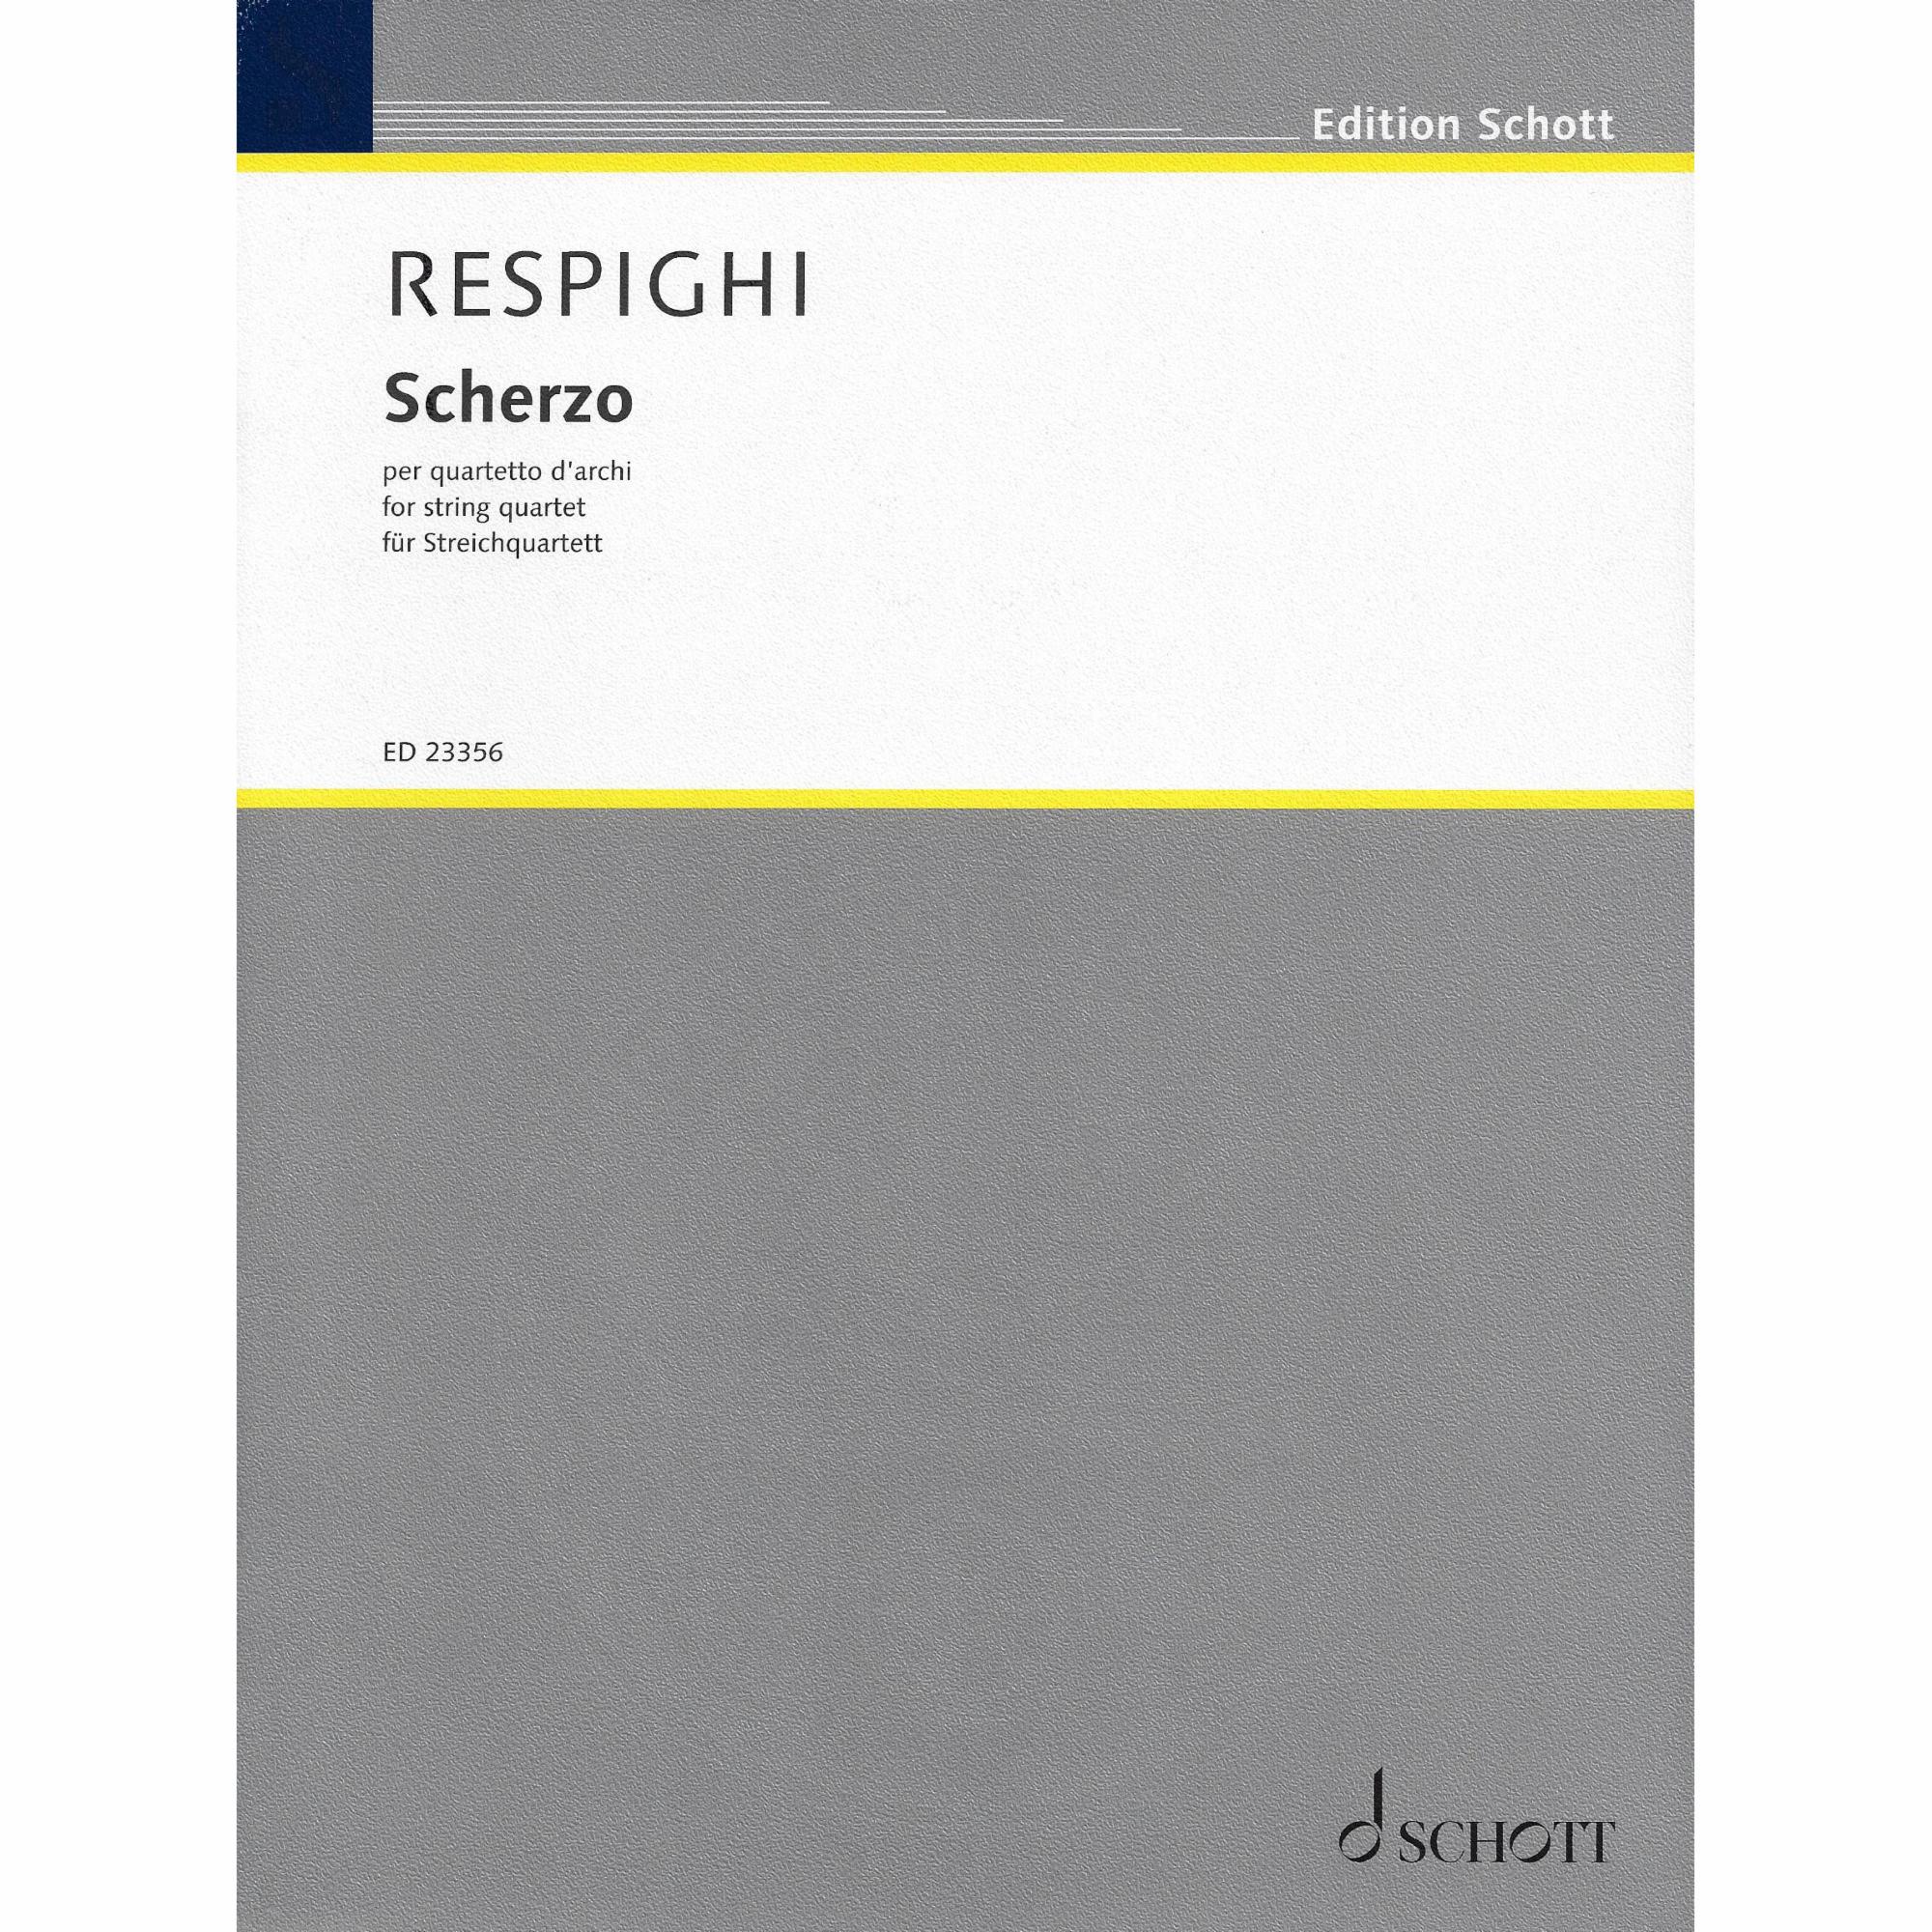 Respighi -- Scherzo in E Minor for String Quartet